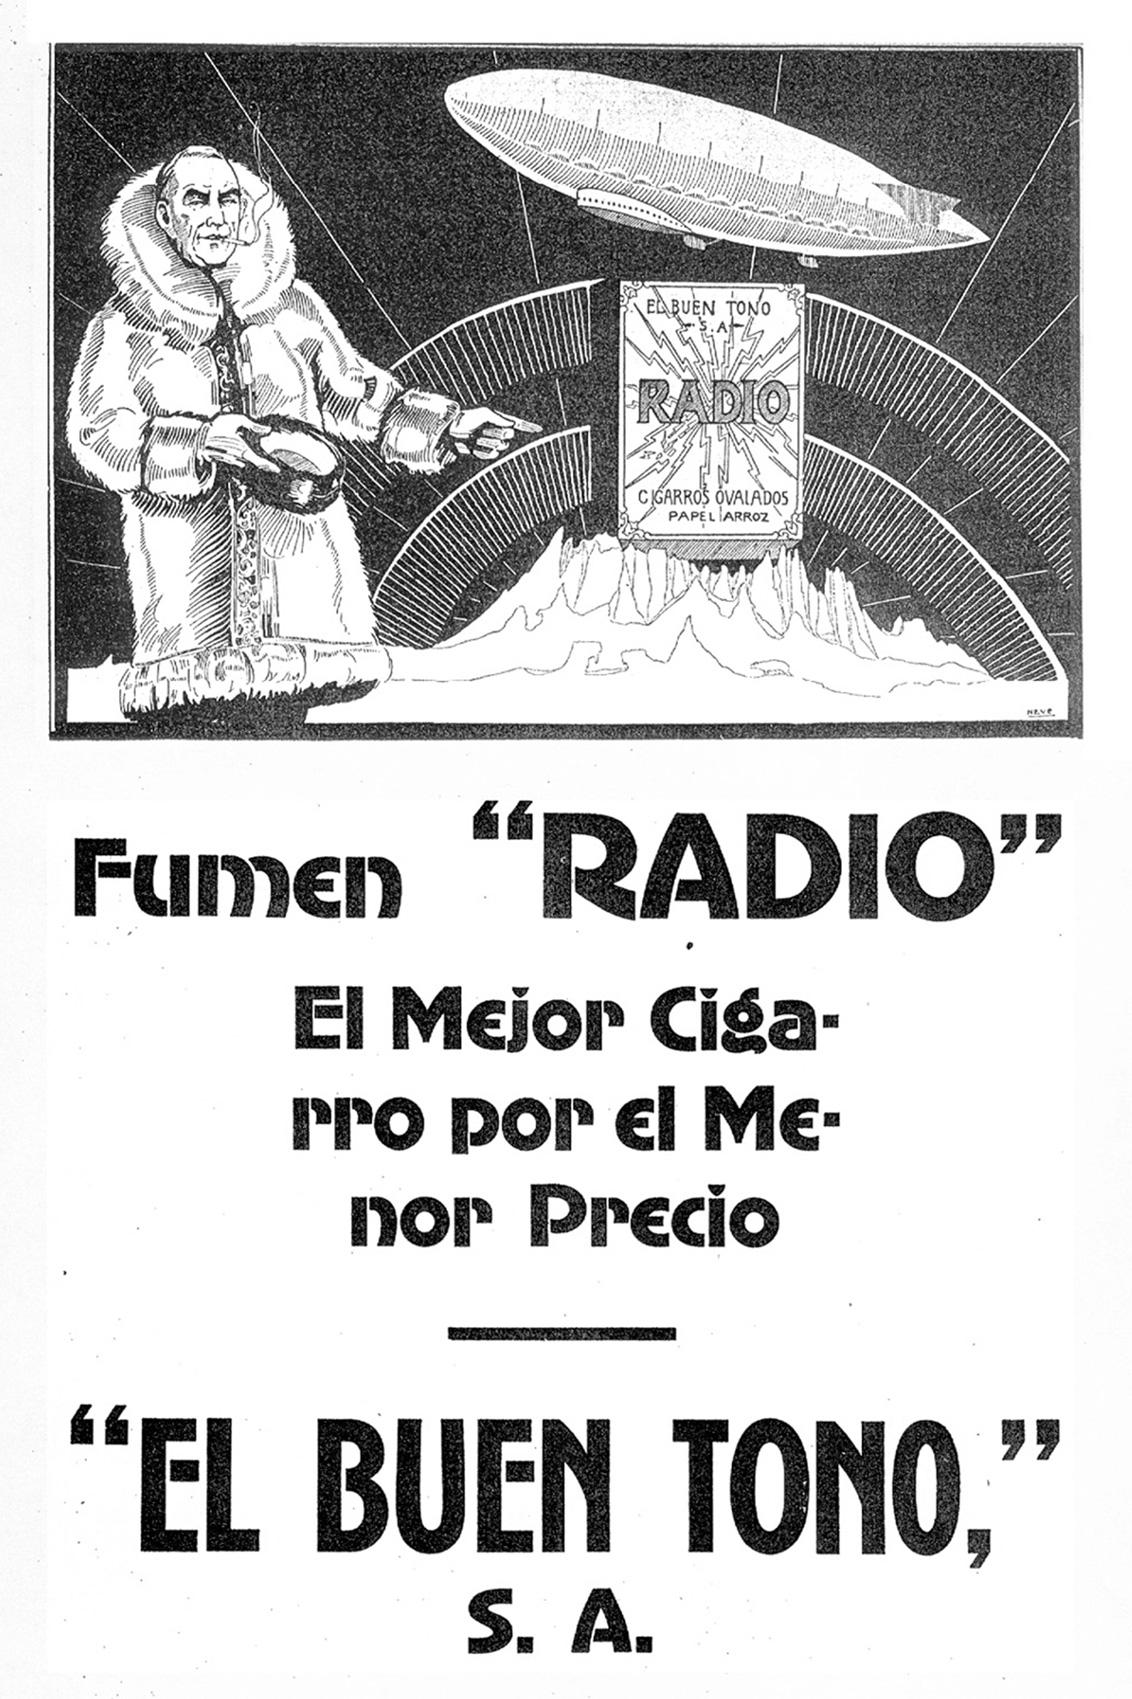 El Buen Tono’s advertisement for Radio cigarettes, published in 